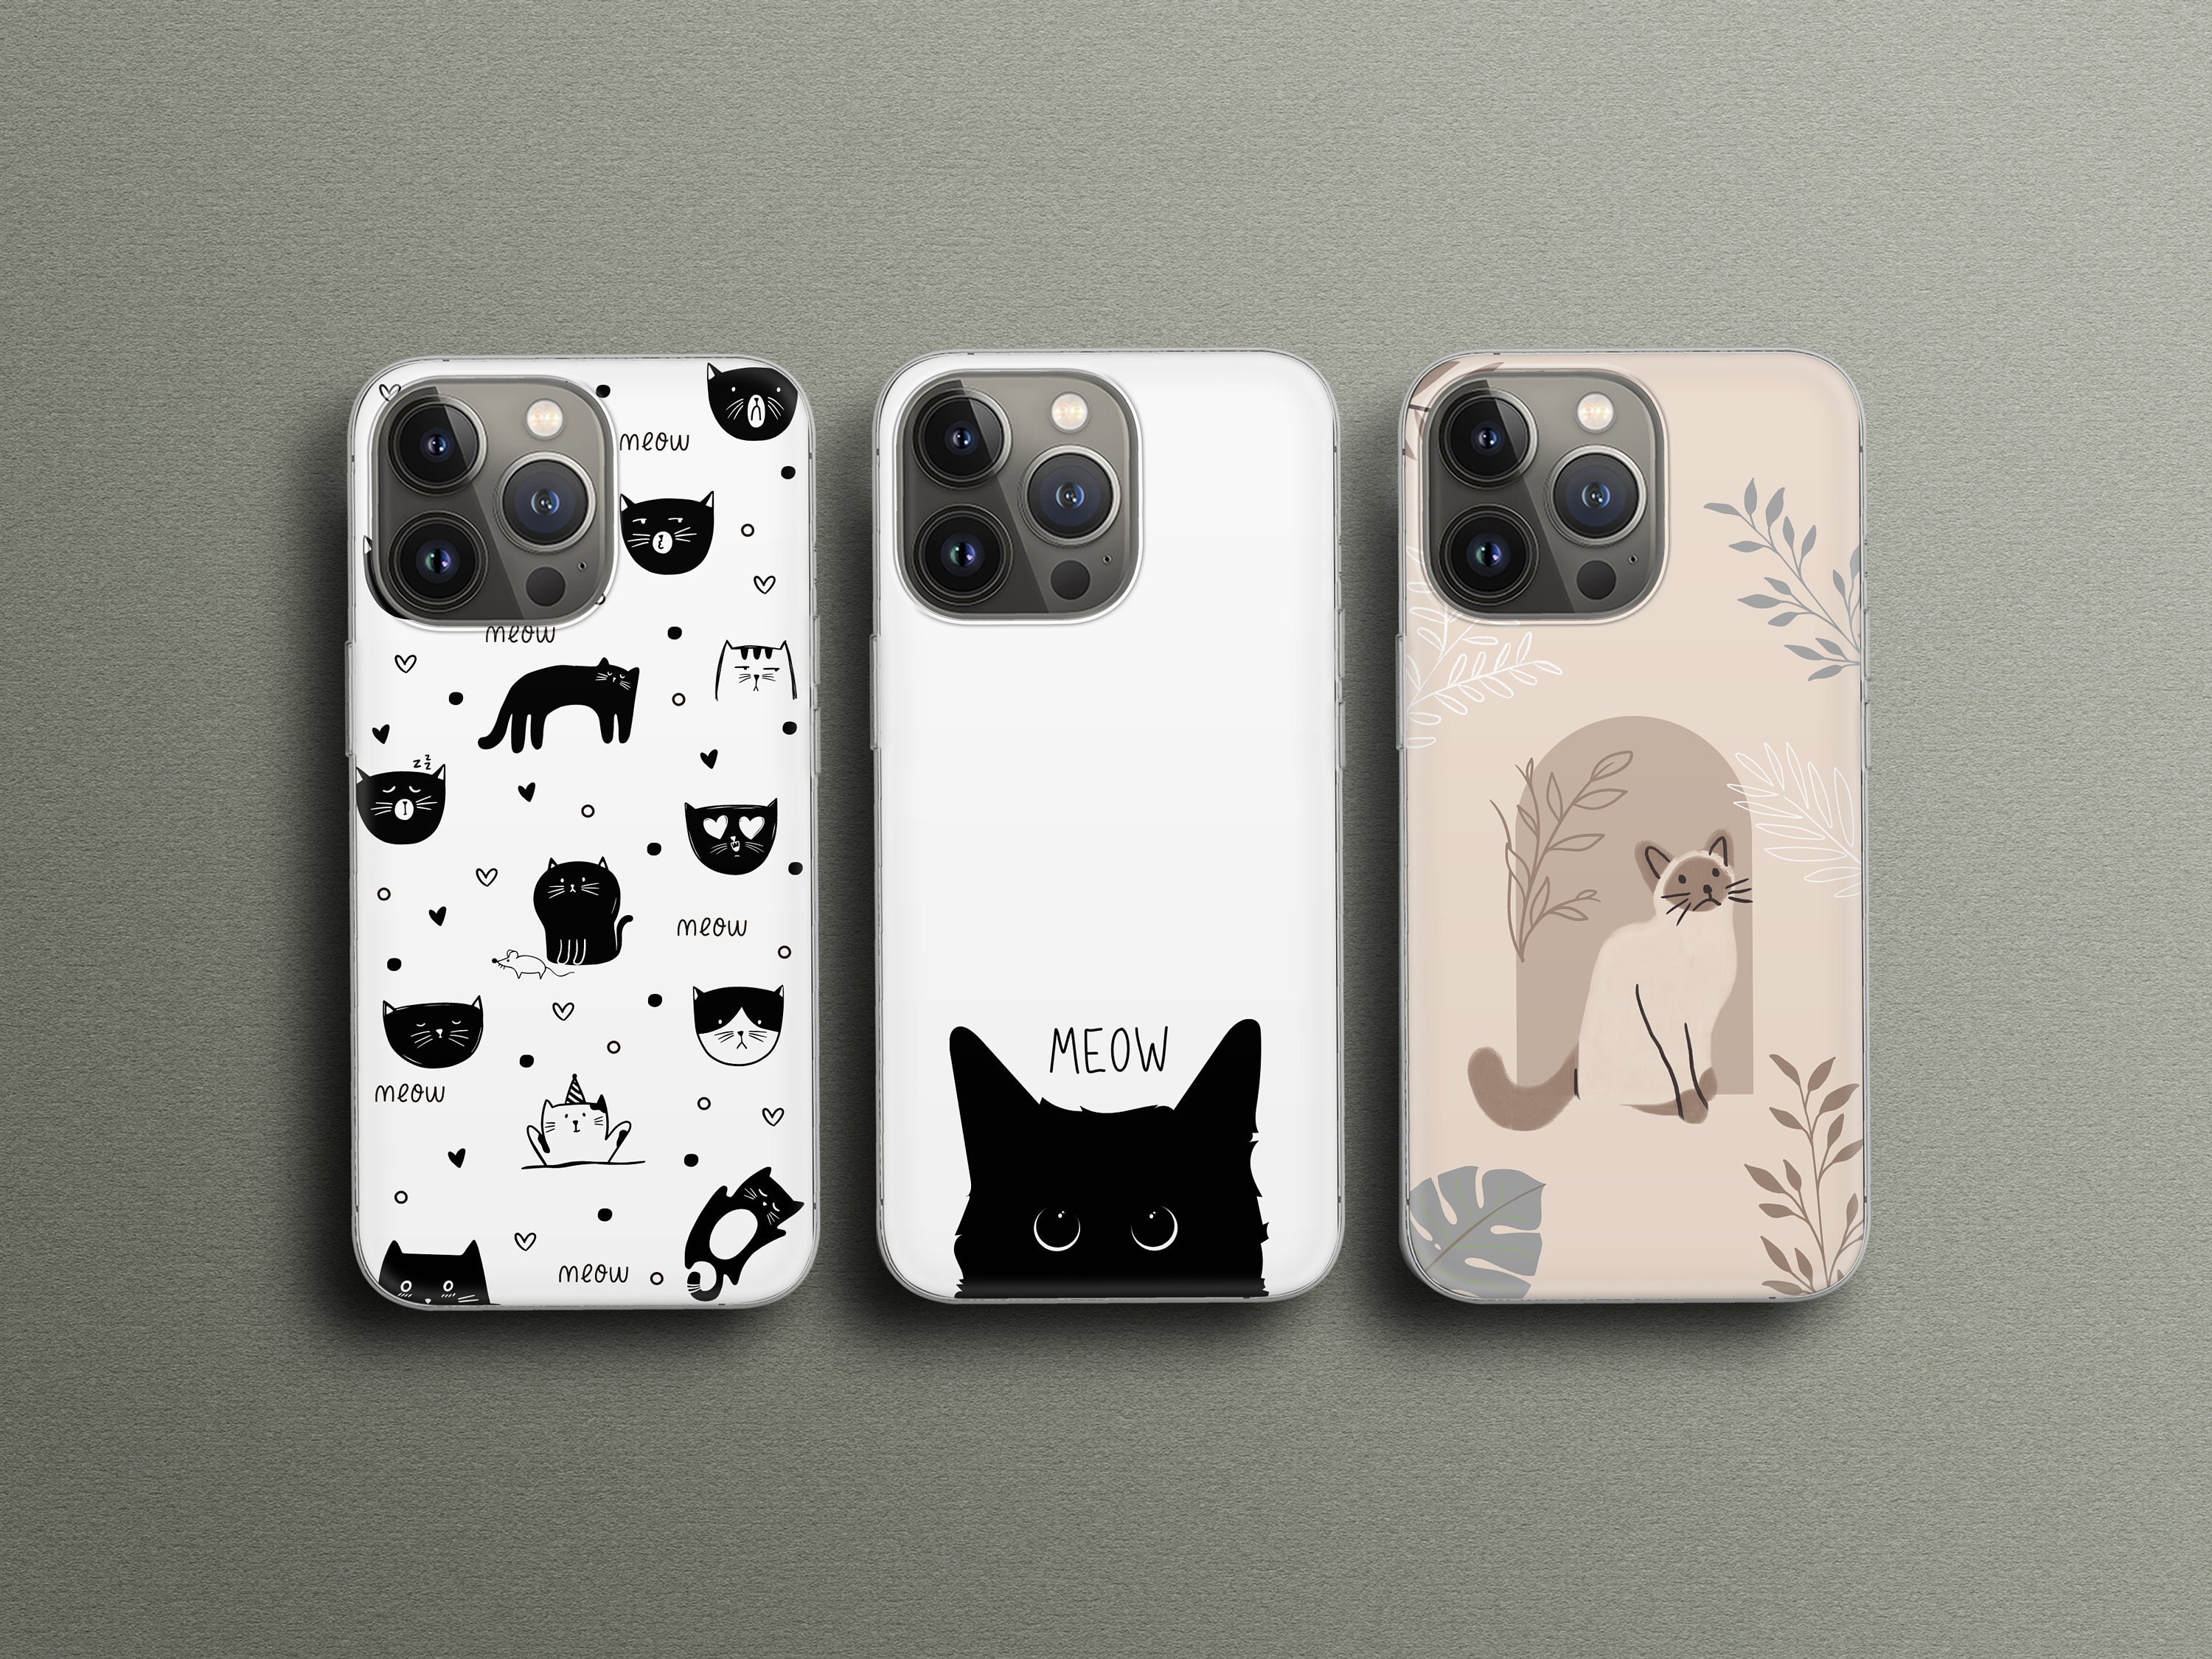 Beluga Cat Meme Face Smiling Case For OnePlus 11 8 9 10 Pro 8T 9R 10T Nord  3 CE 2 Lite CE 3 N10 N20 N30 Nord 2T Cover - AliExpress